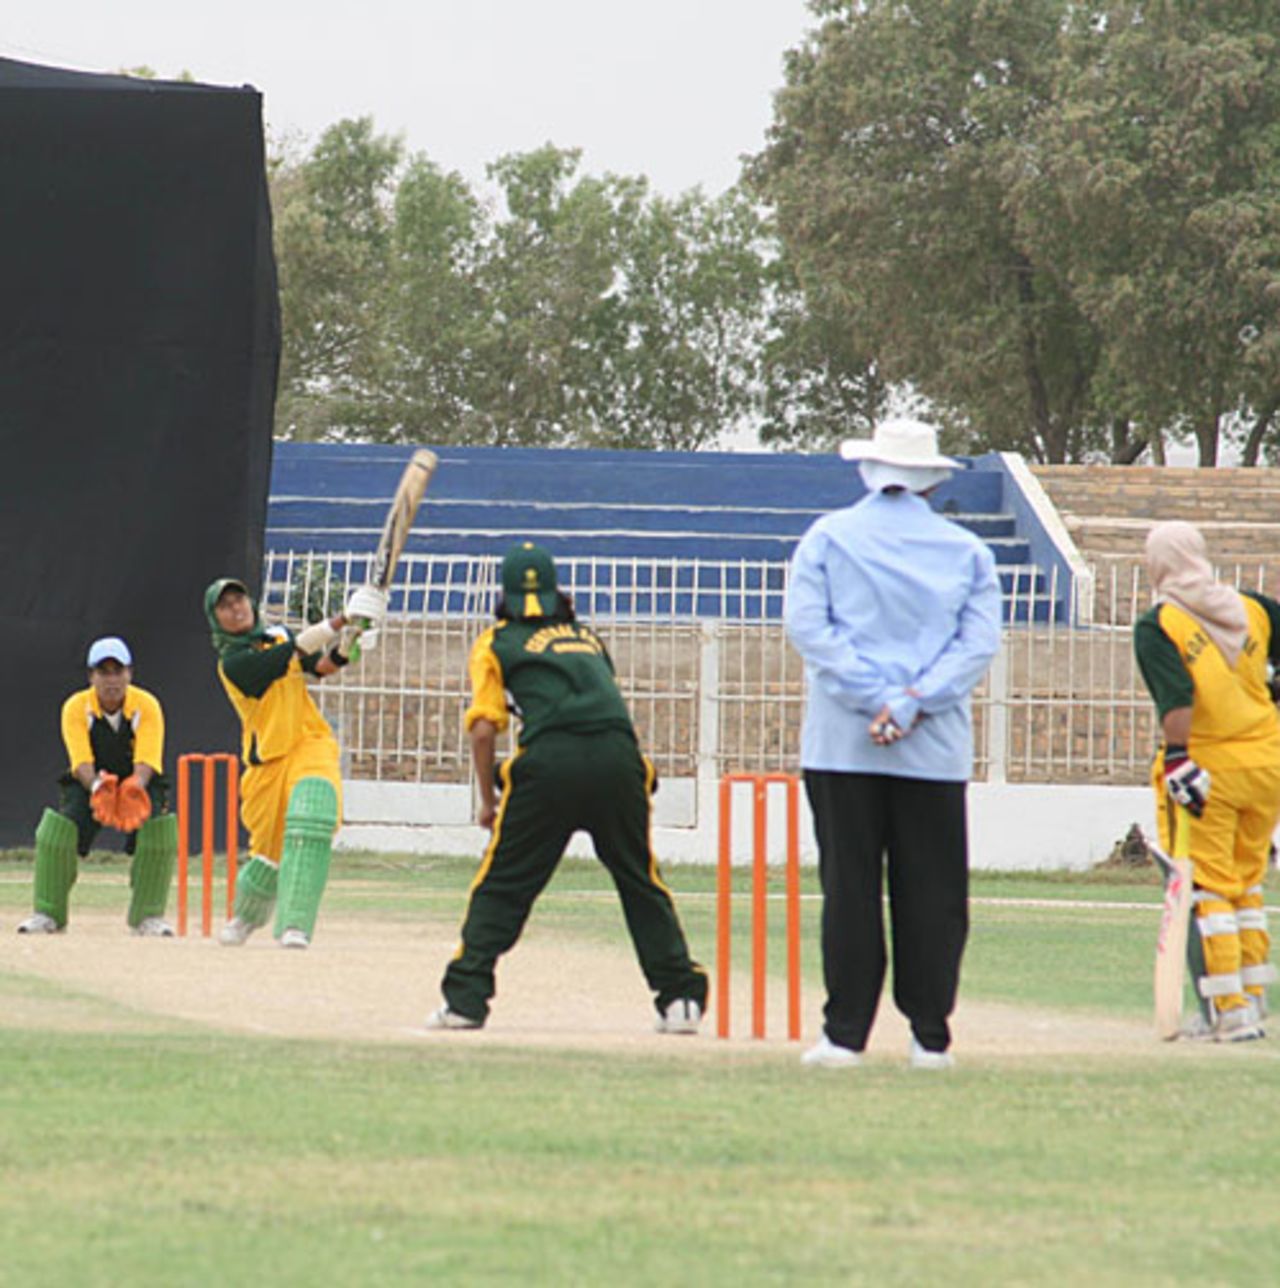 Players participate in Pakistan's inaugural women's Twenty20 championship